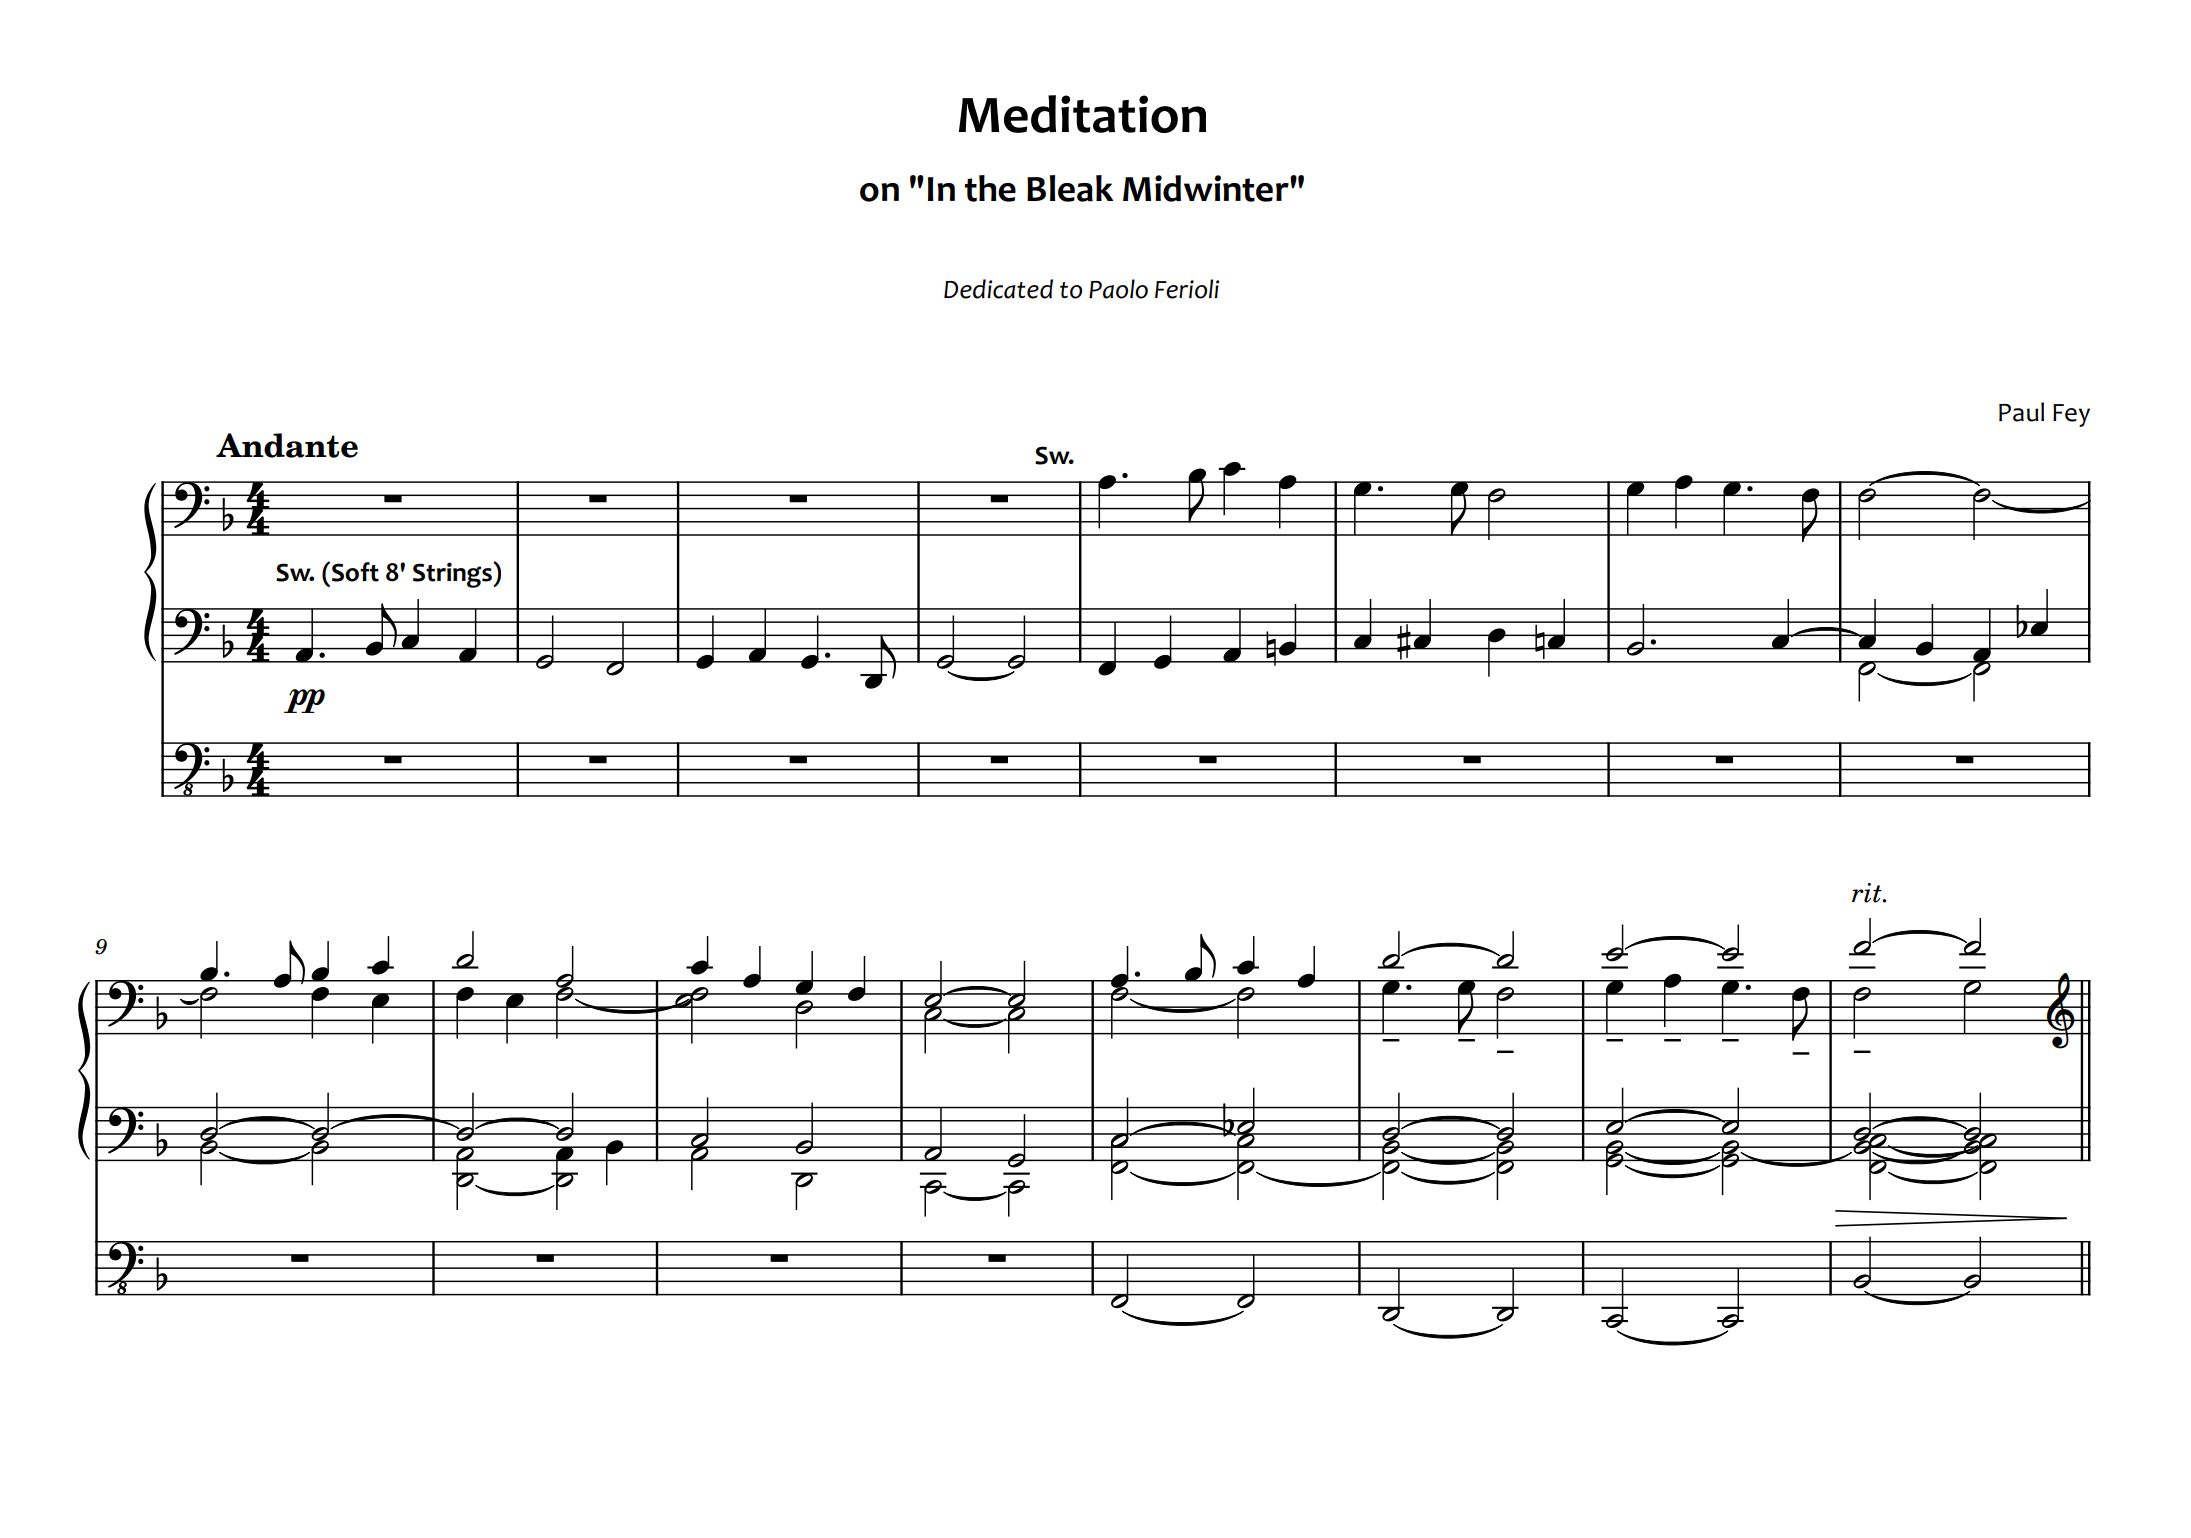 Meditation on "In the Bleak Midwinter" (Sheet Music) - Pipe Organ Music by Paul Fey